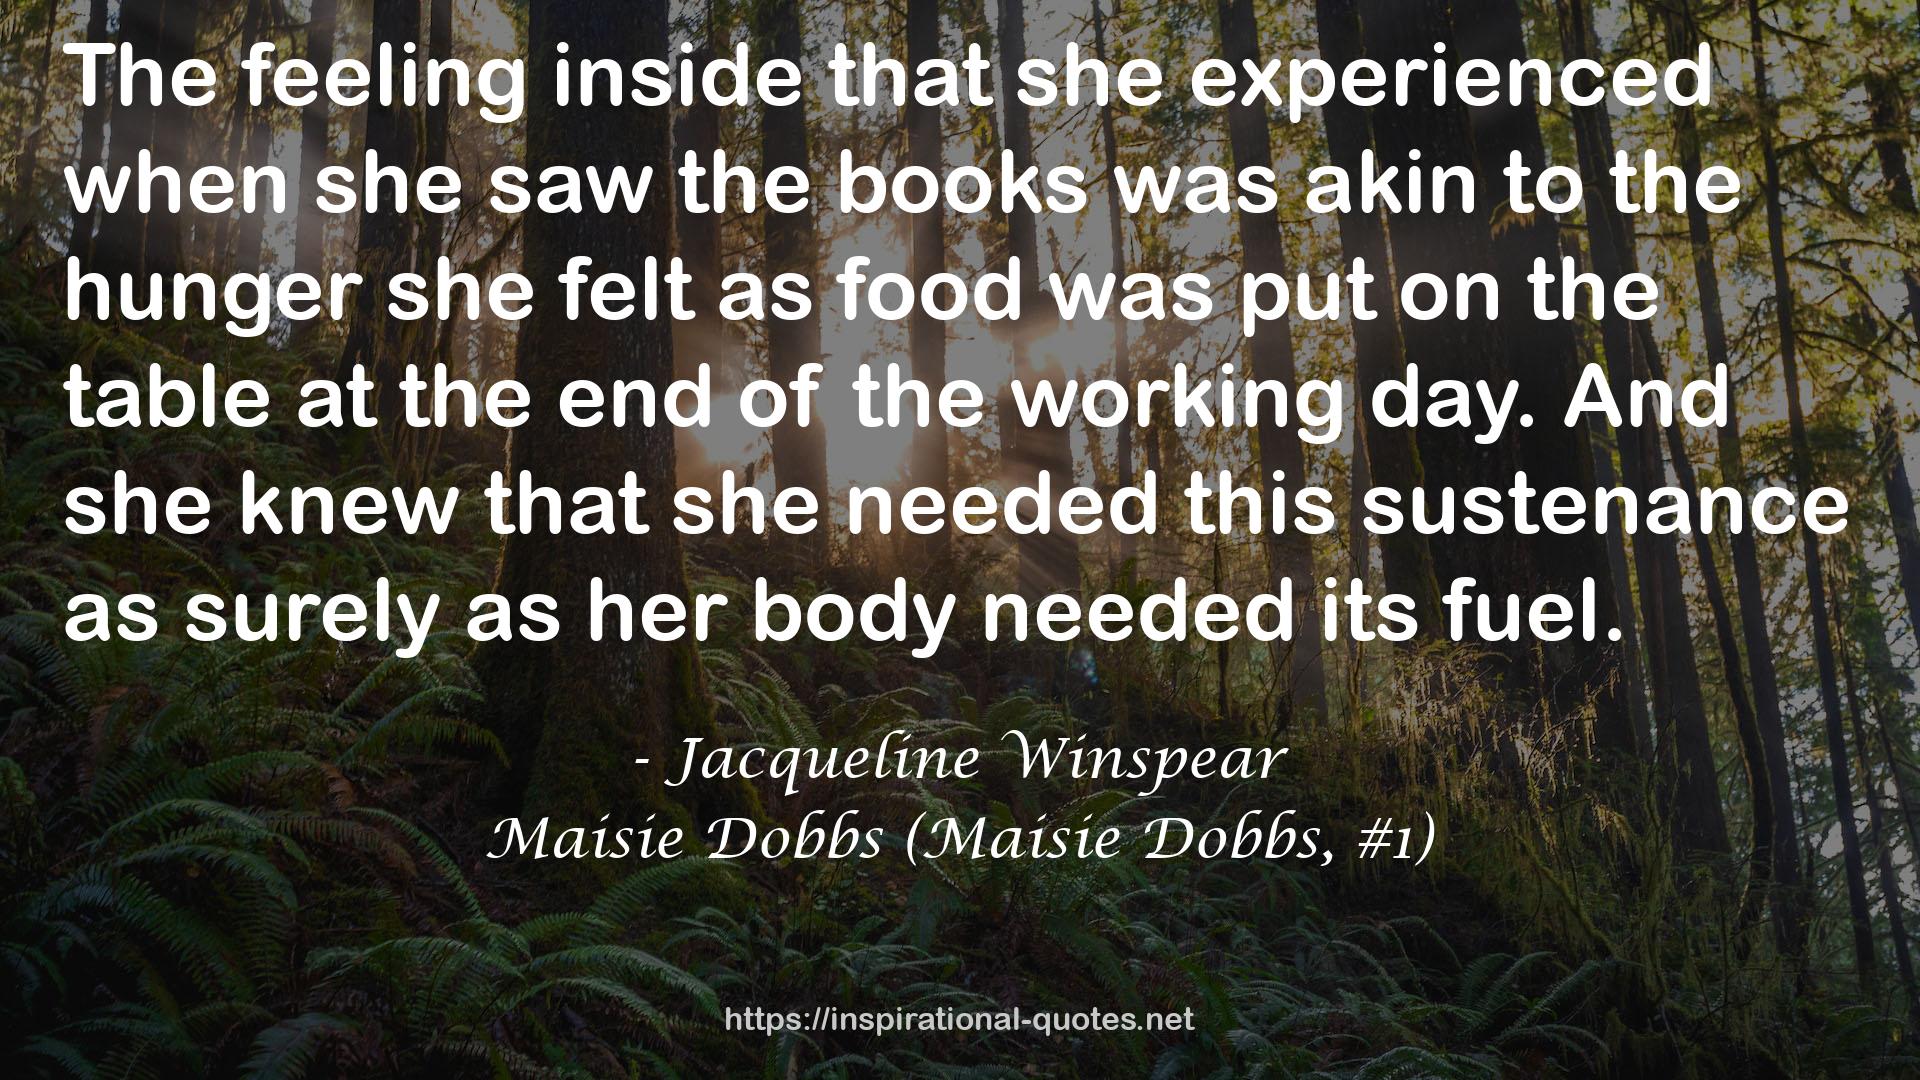 Maisie Dobbs (Maisie Dobbs, #1) QUOTES